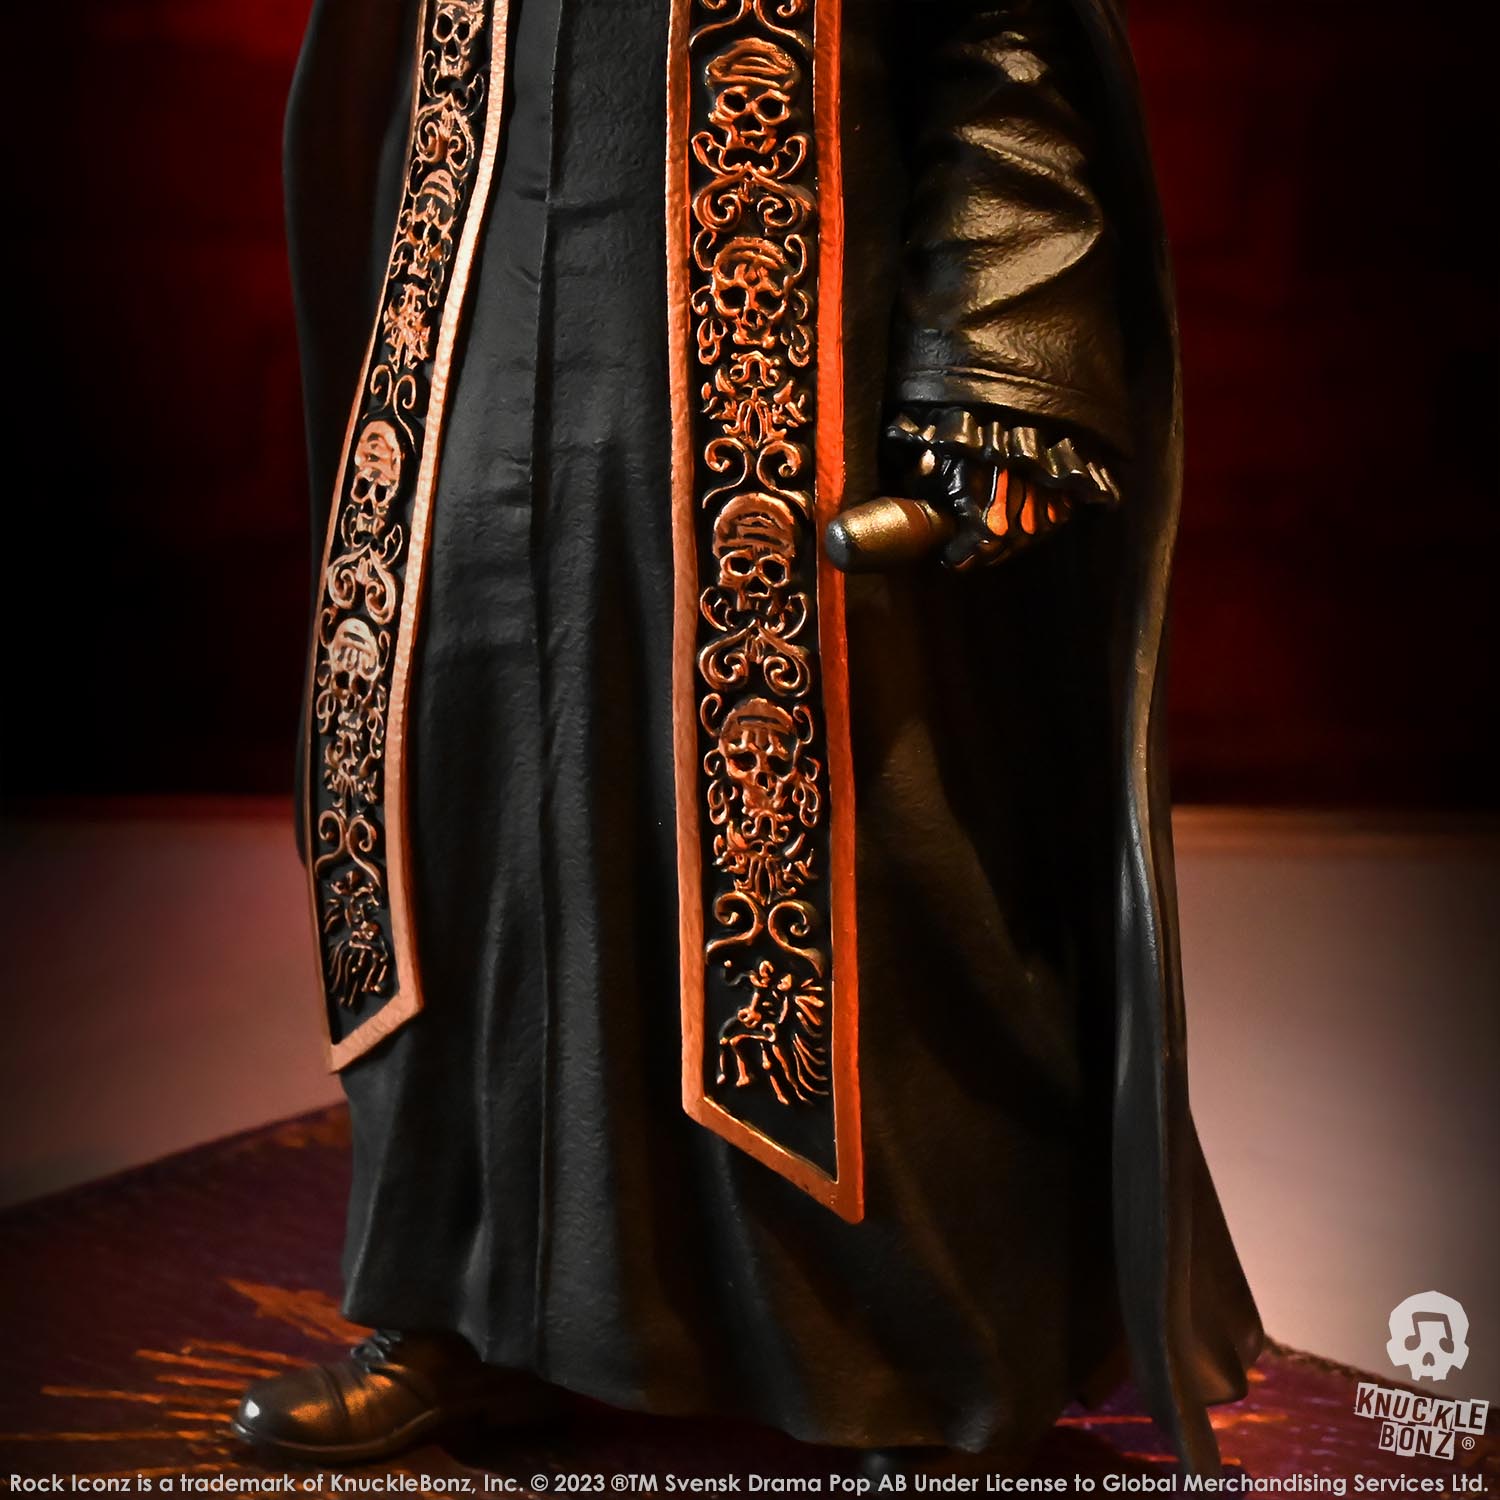 Ghost Papa Emeritus IV Black Robes KnuckleBonz Statue